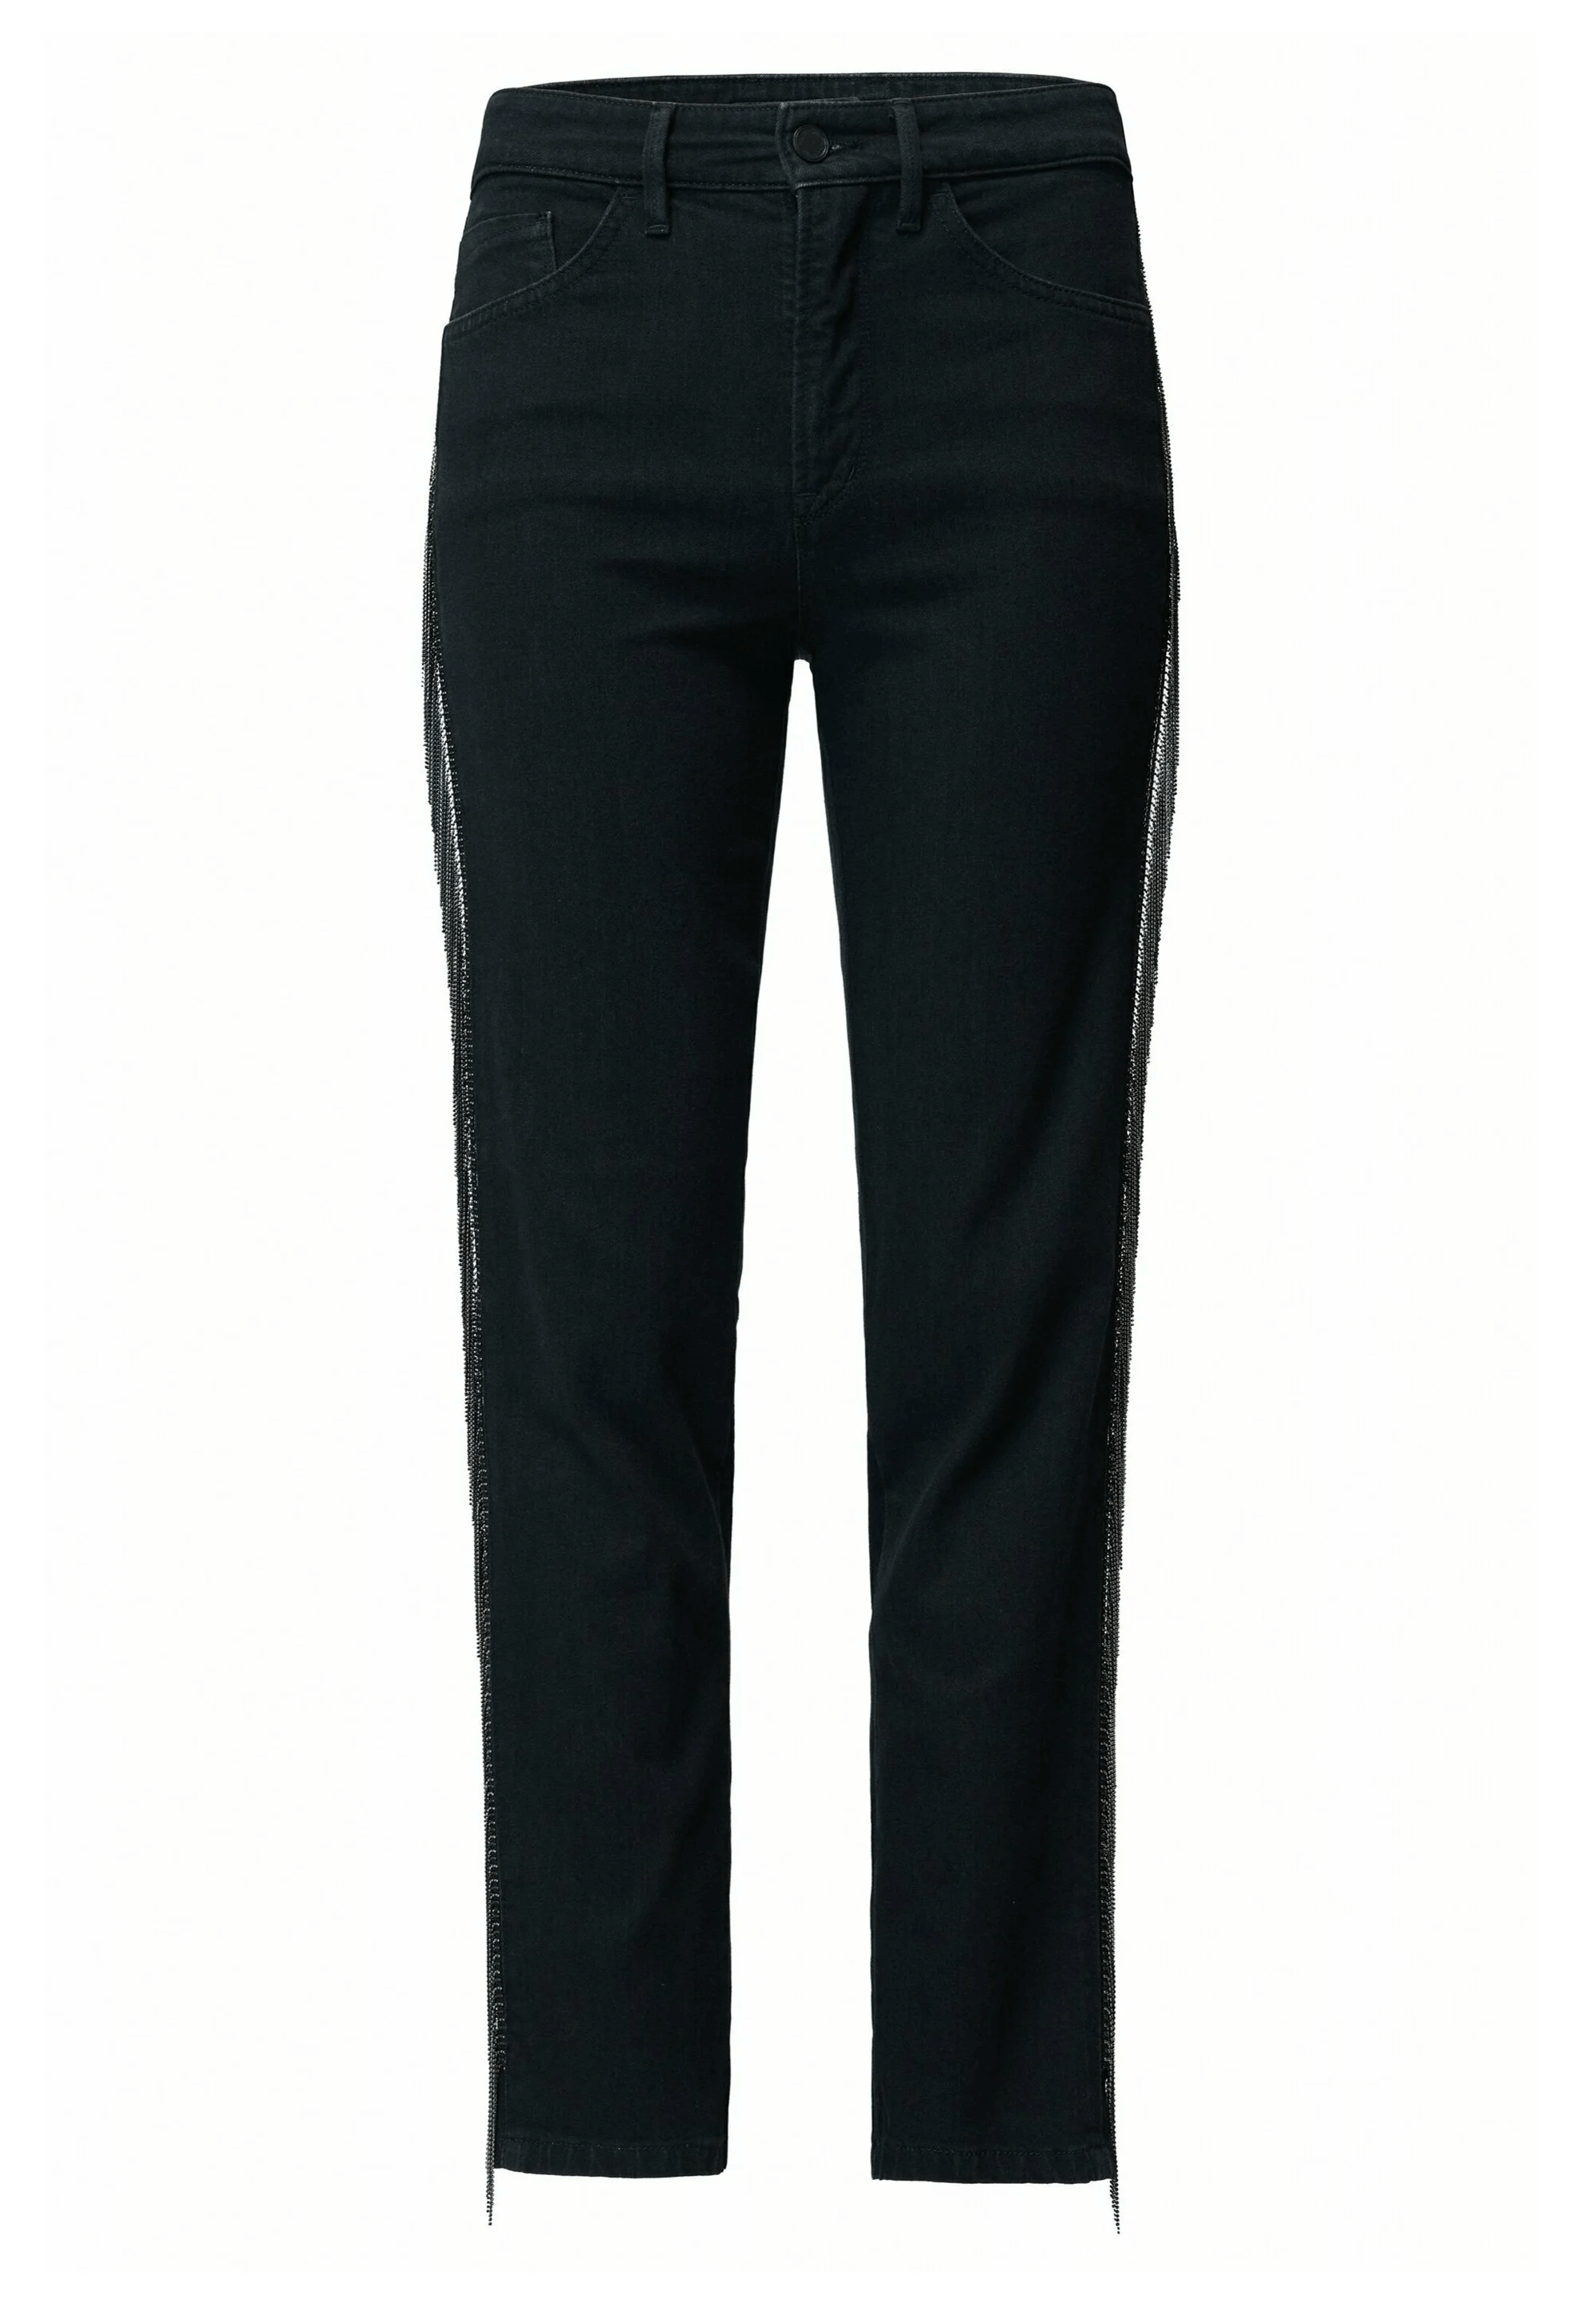 Джинсы Salsa Jeans Faith Push In Cropped Slim, черный (Размер 46-48 RU) greg lauren укороченные джинсы